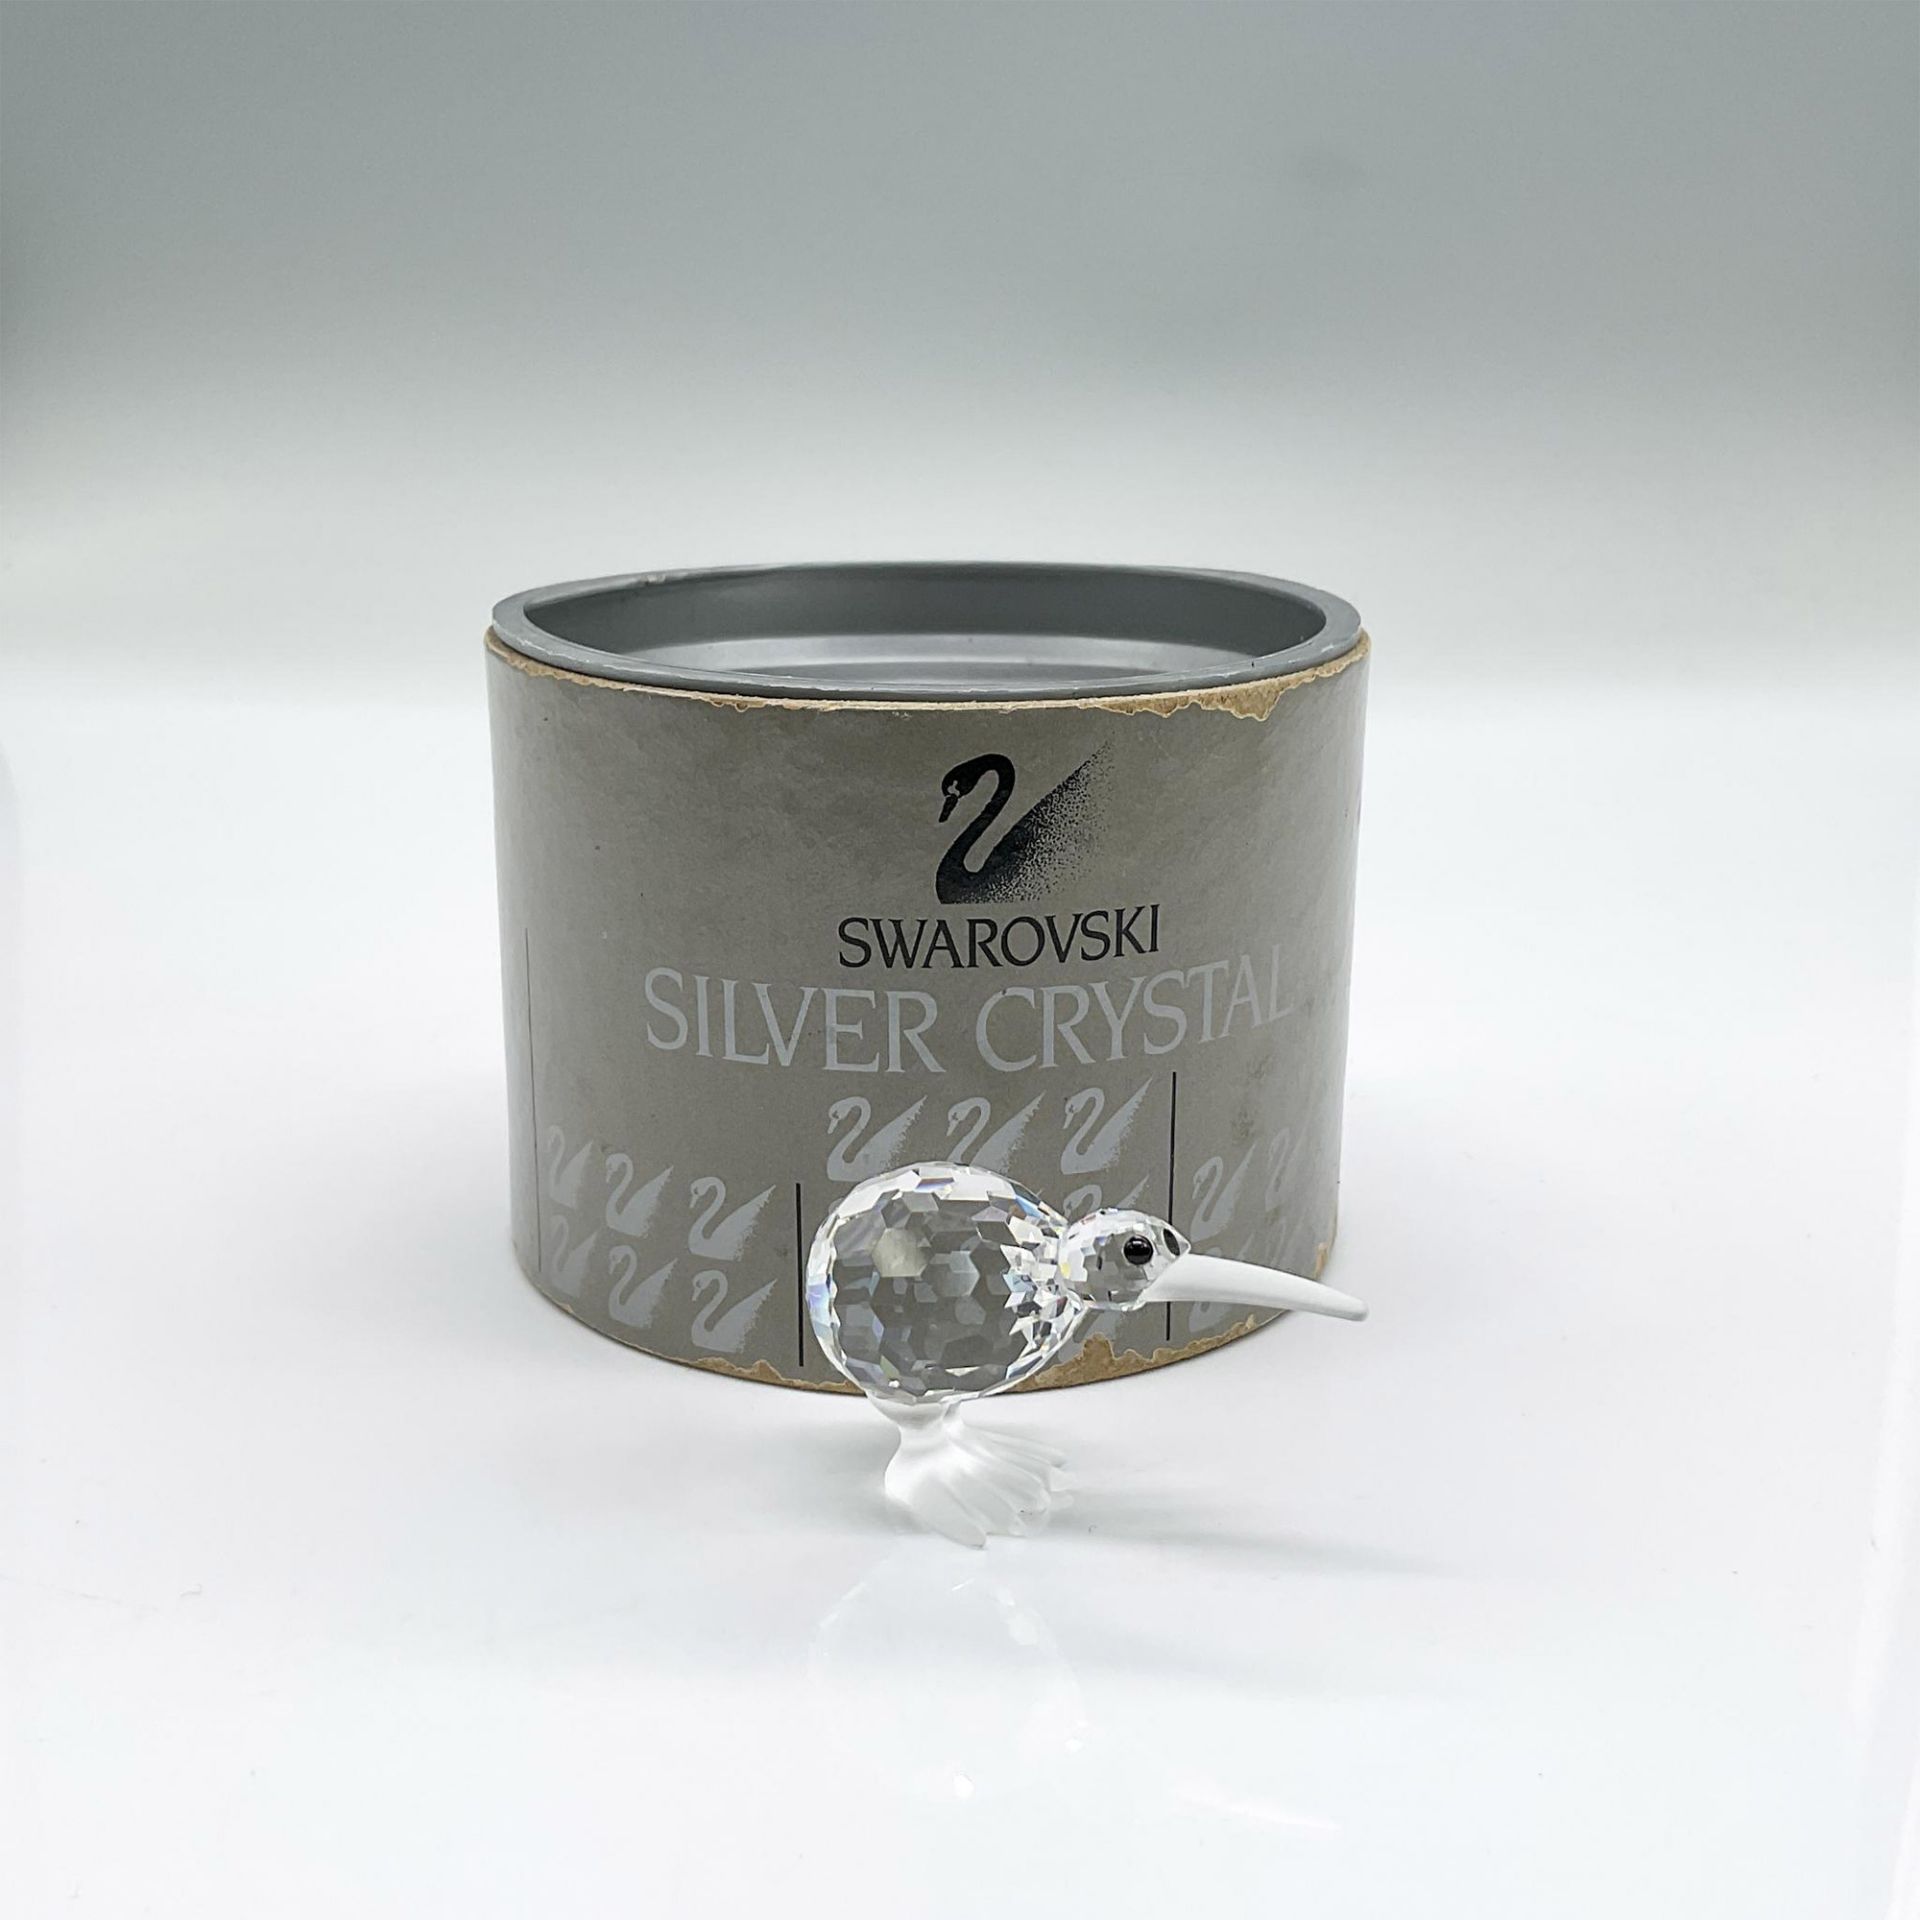 Swarovski Silver Crystal Figurine, Kiwi Bird - Image 4 of 4